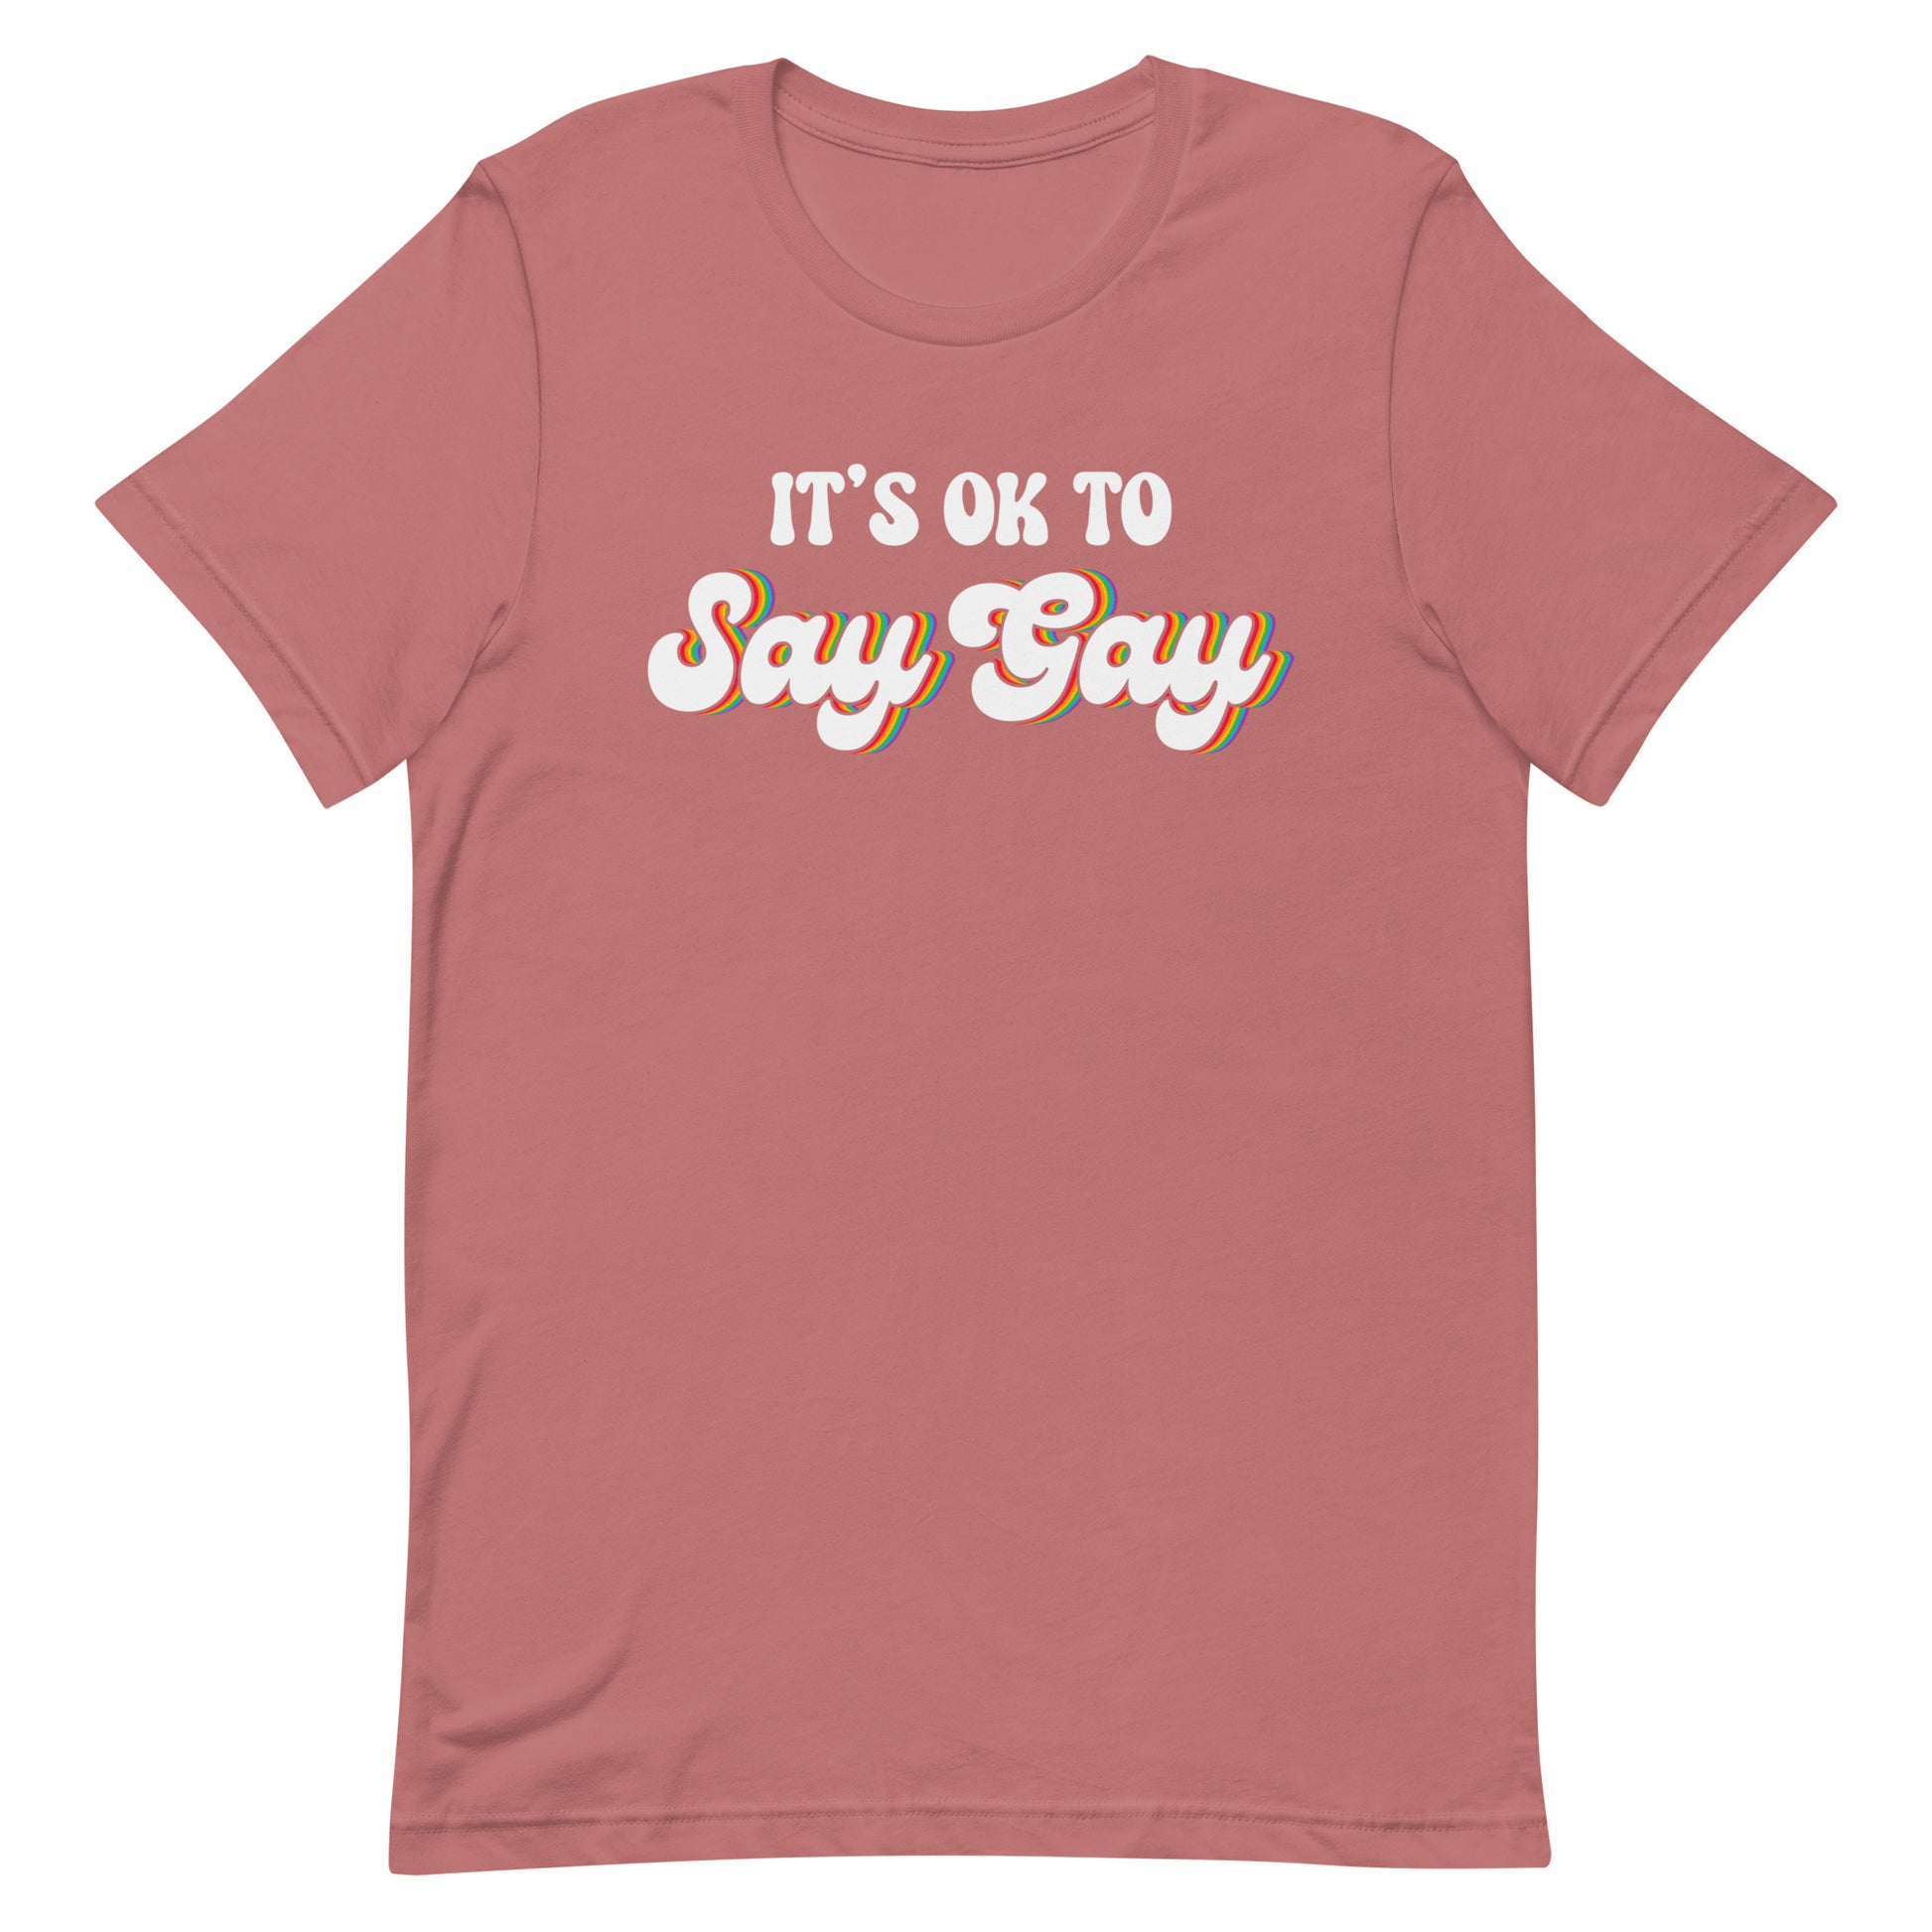 It's Ok To Say Gay - LGBT Pride T-Shirt - gay pride apparel